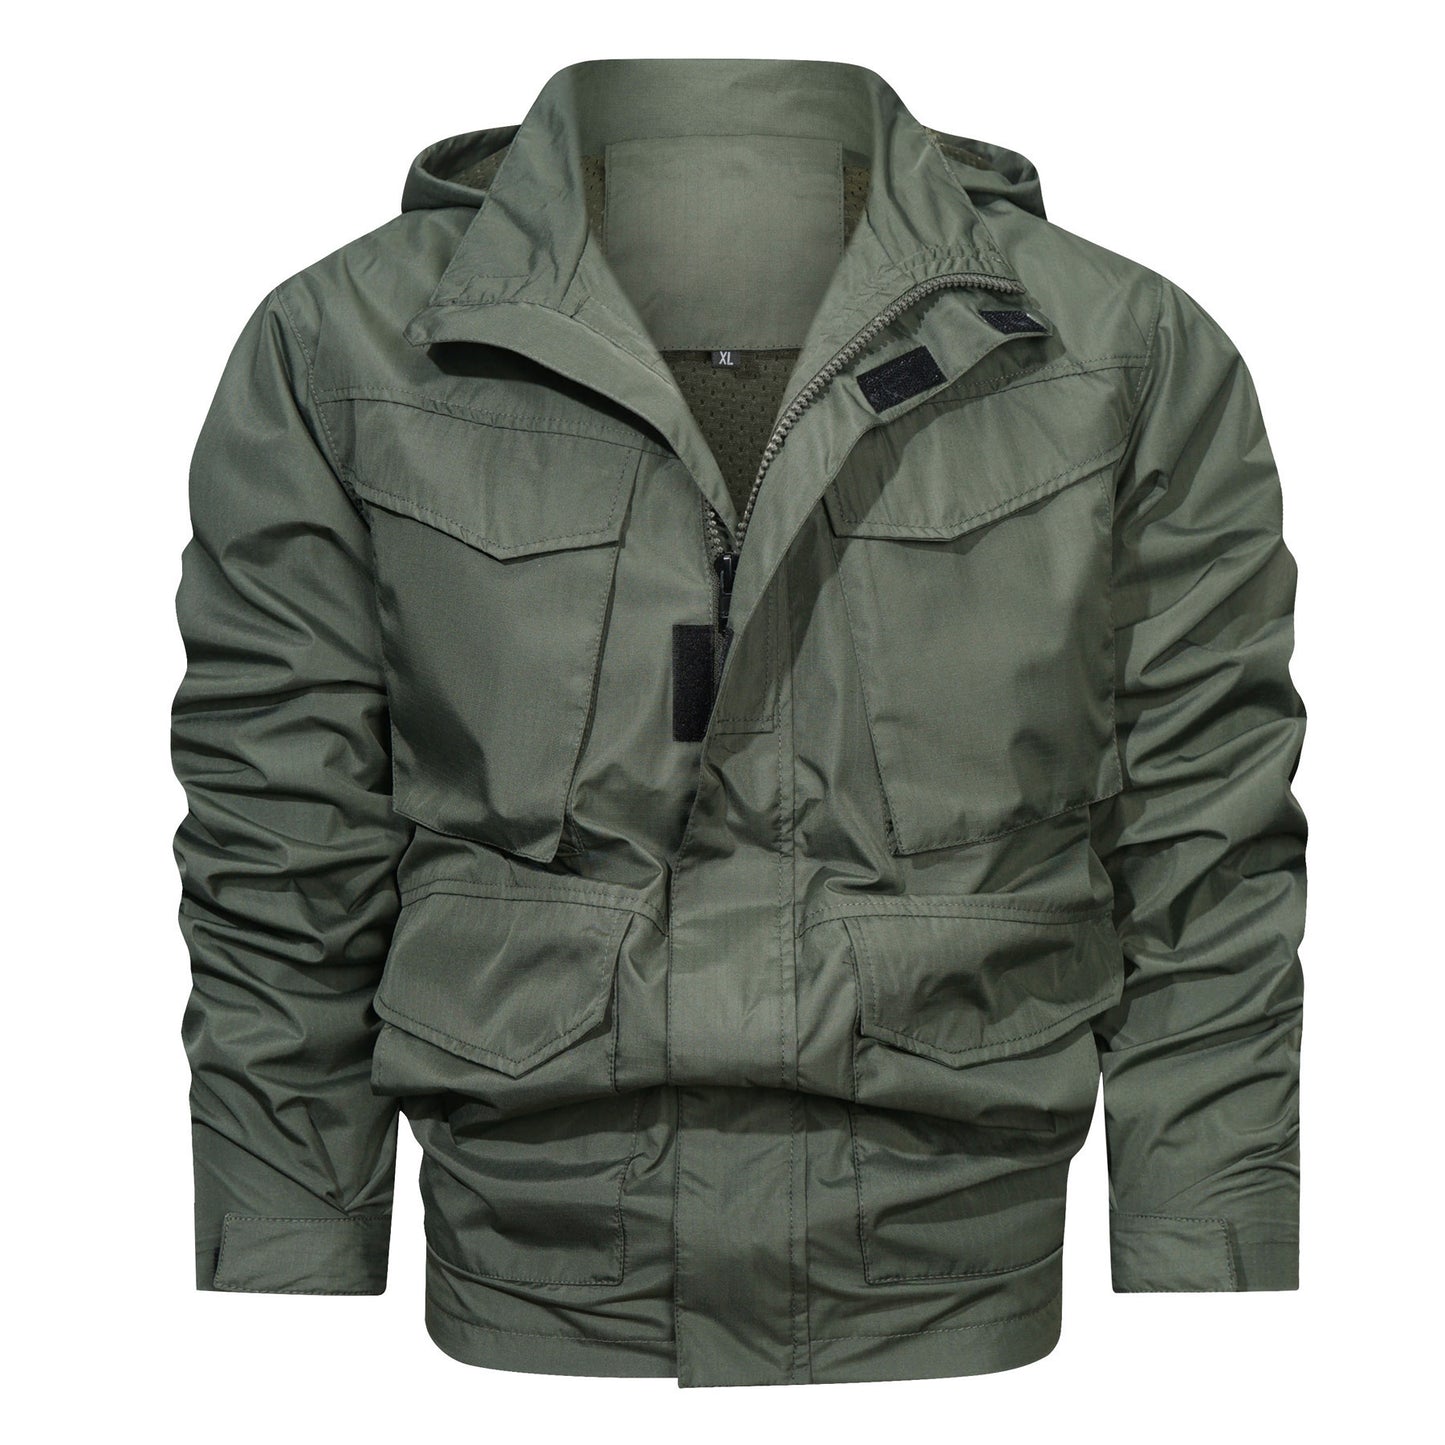 Men's Hoodie Jacket Fall Winter Regular Coat Windproof Warm Casual Comfortable Jacket Long Sleeve